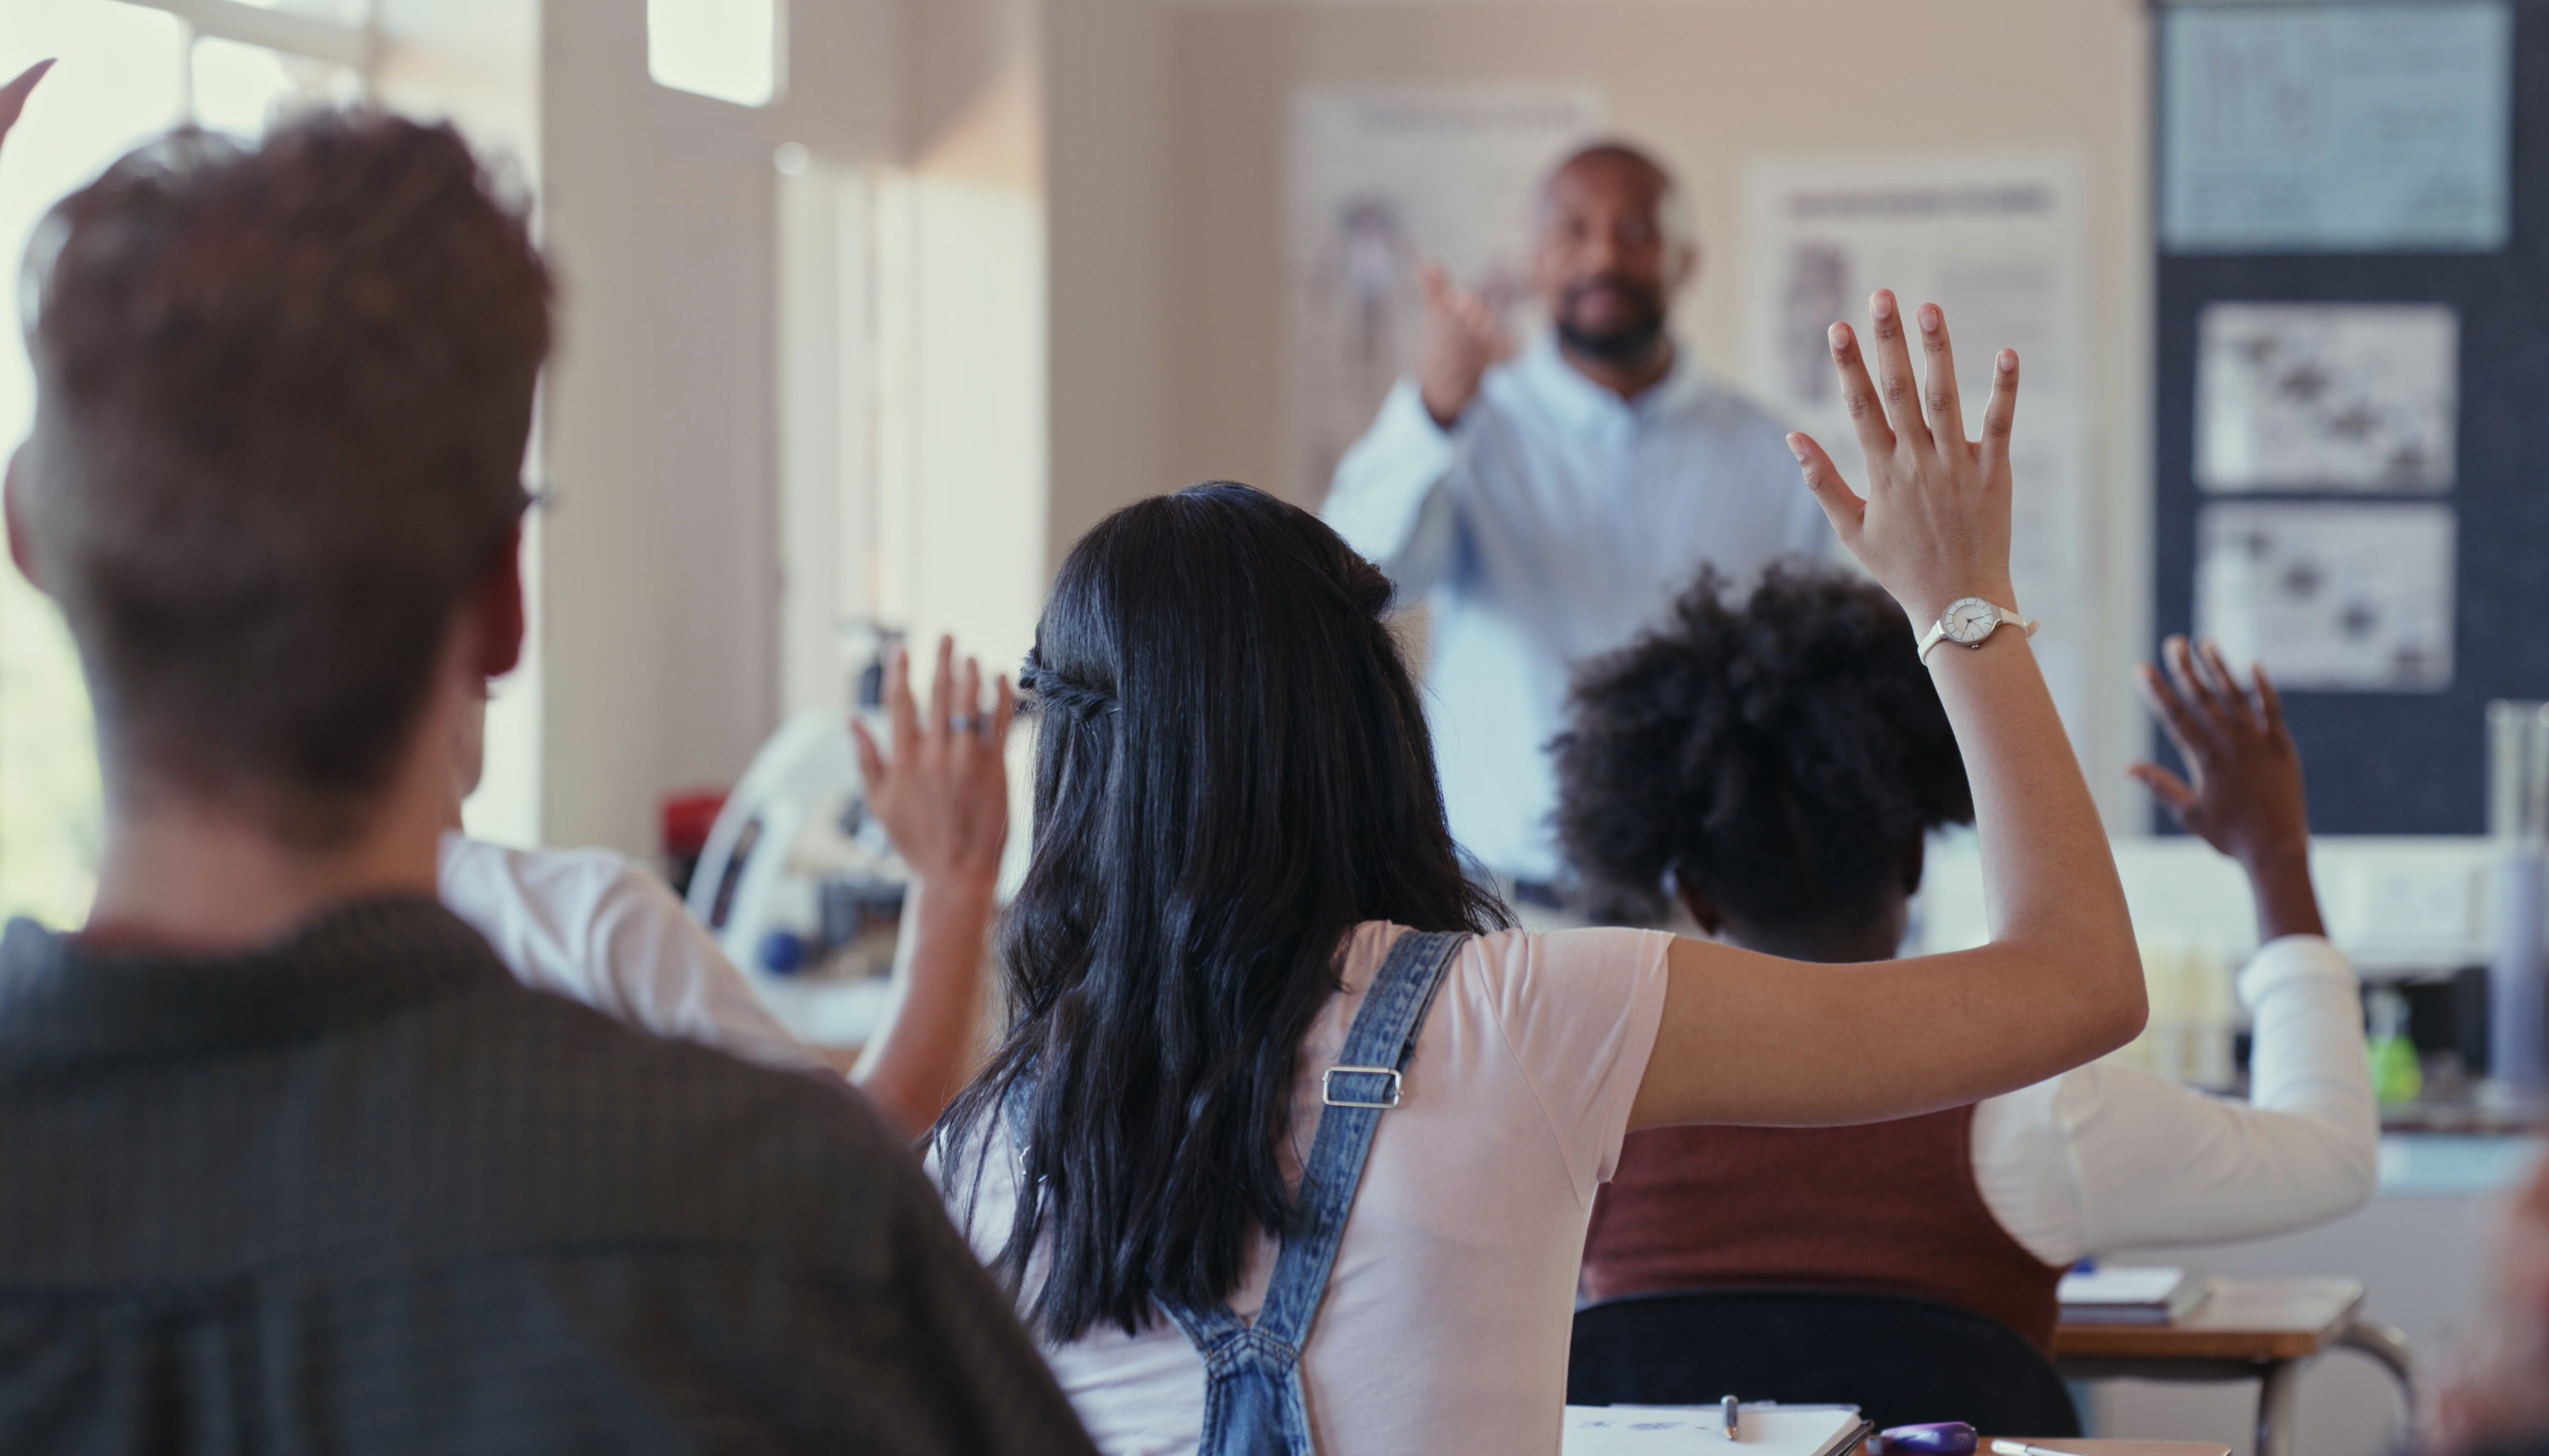 students raise hands as a teacher asks a question